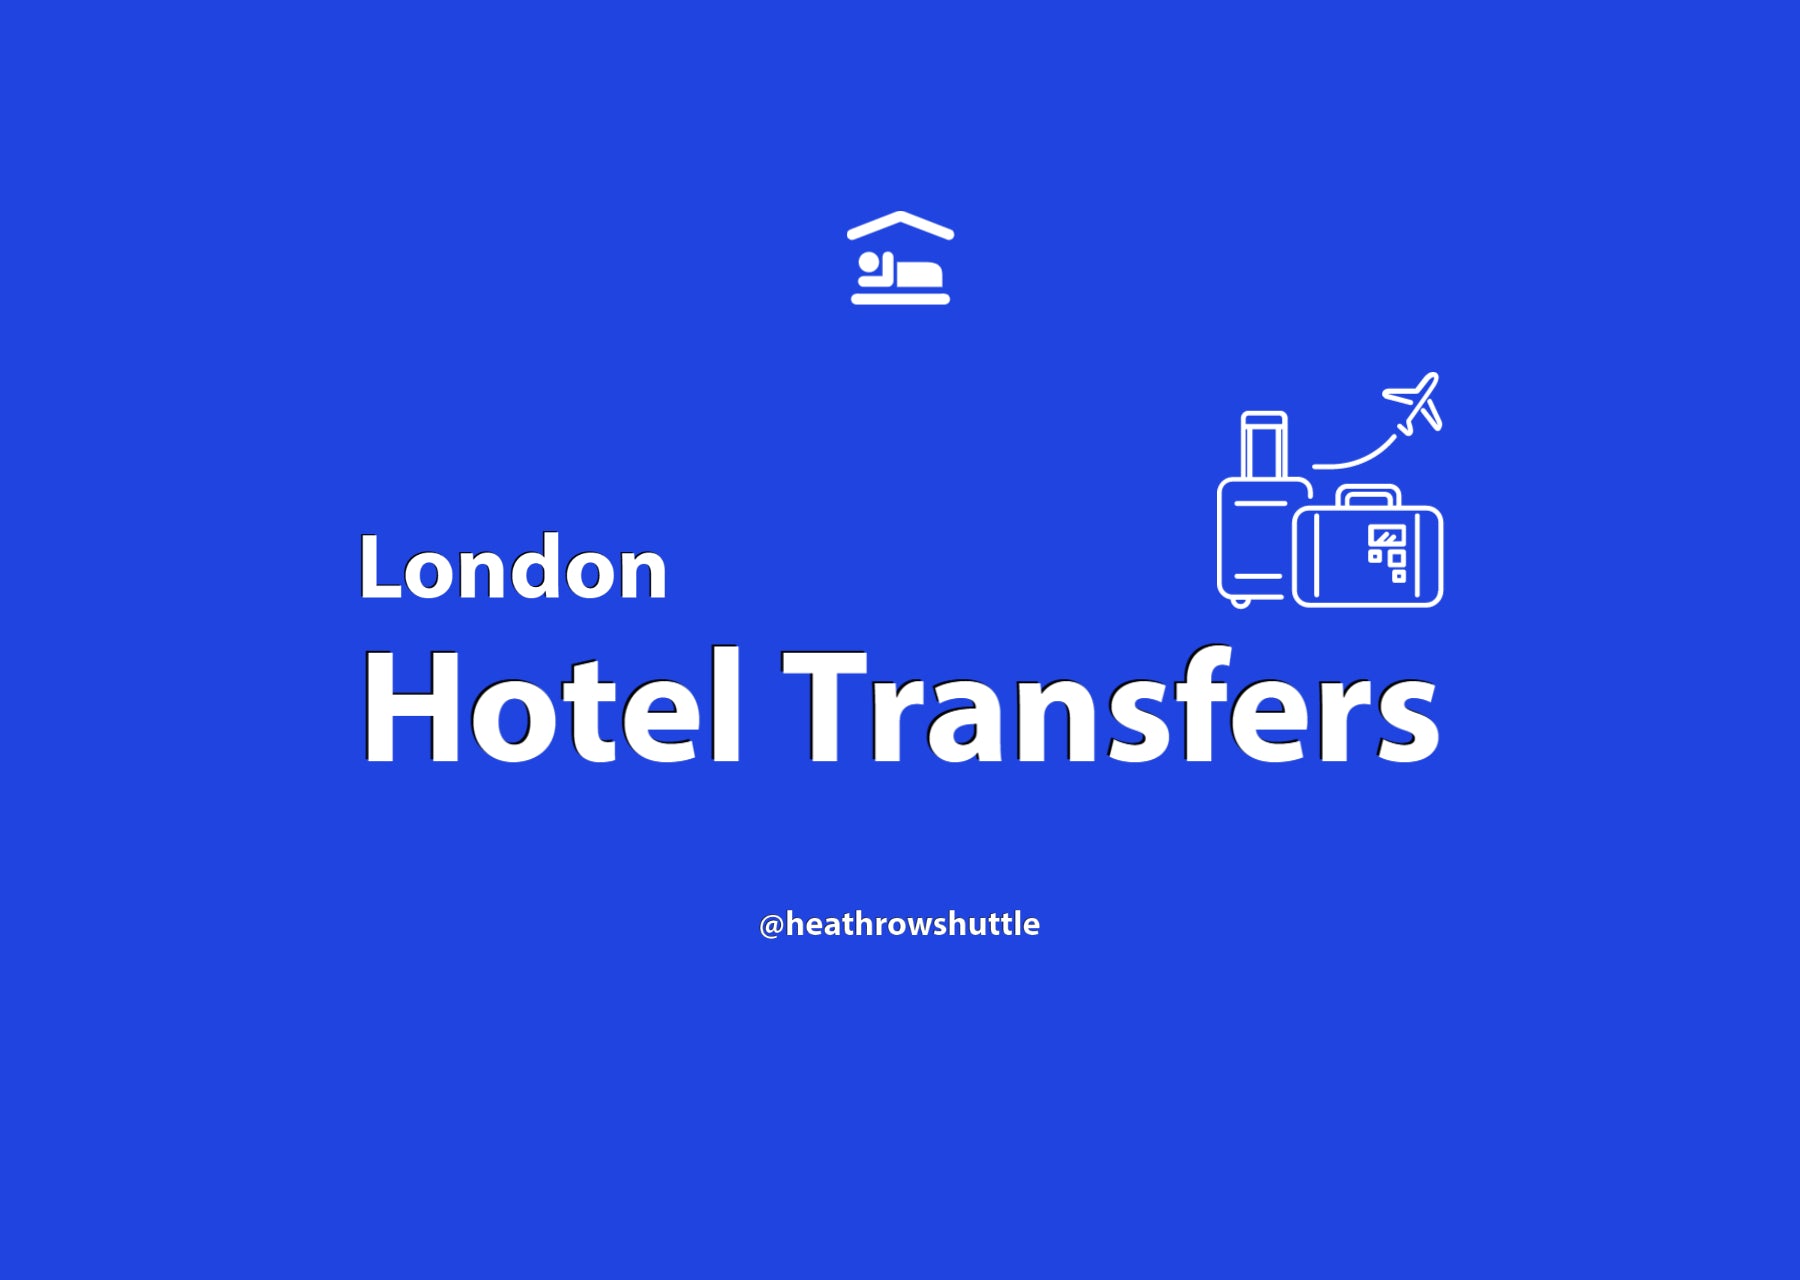 London Hotel Transport Services